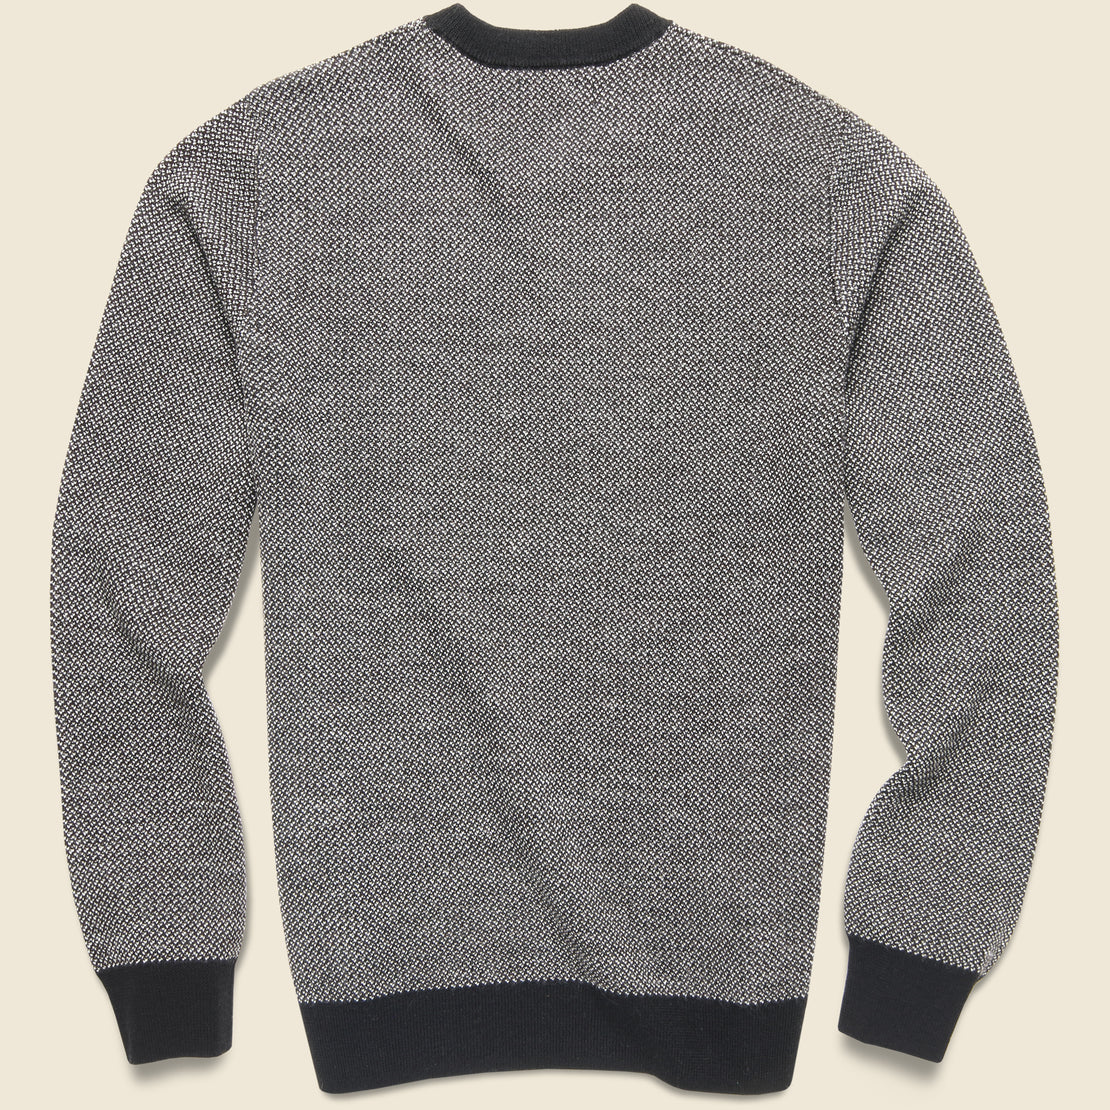 Everett Sweater - Black Birdseye - Taylor Stitch - STAG Provisions - Tops - Sweater